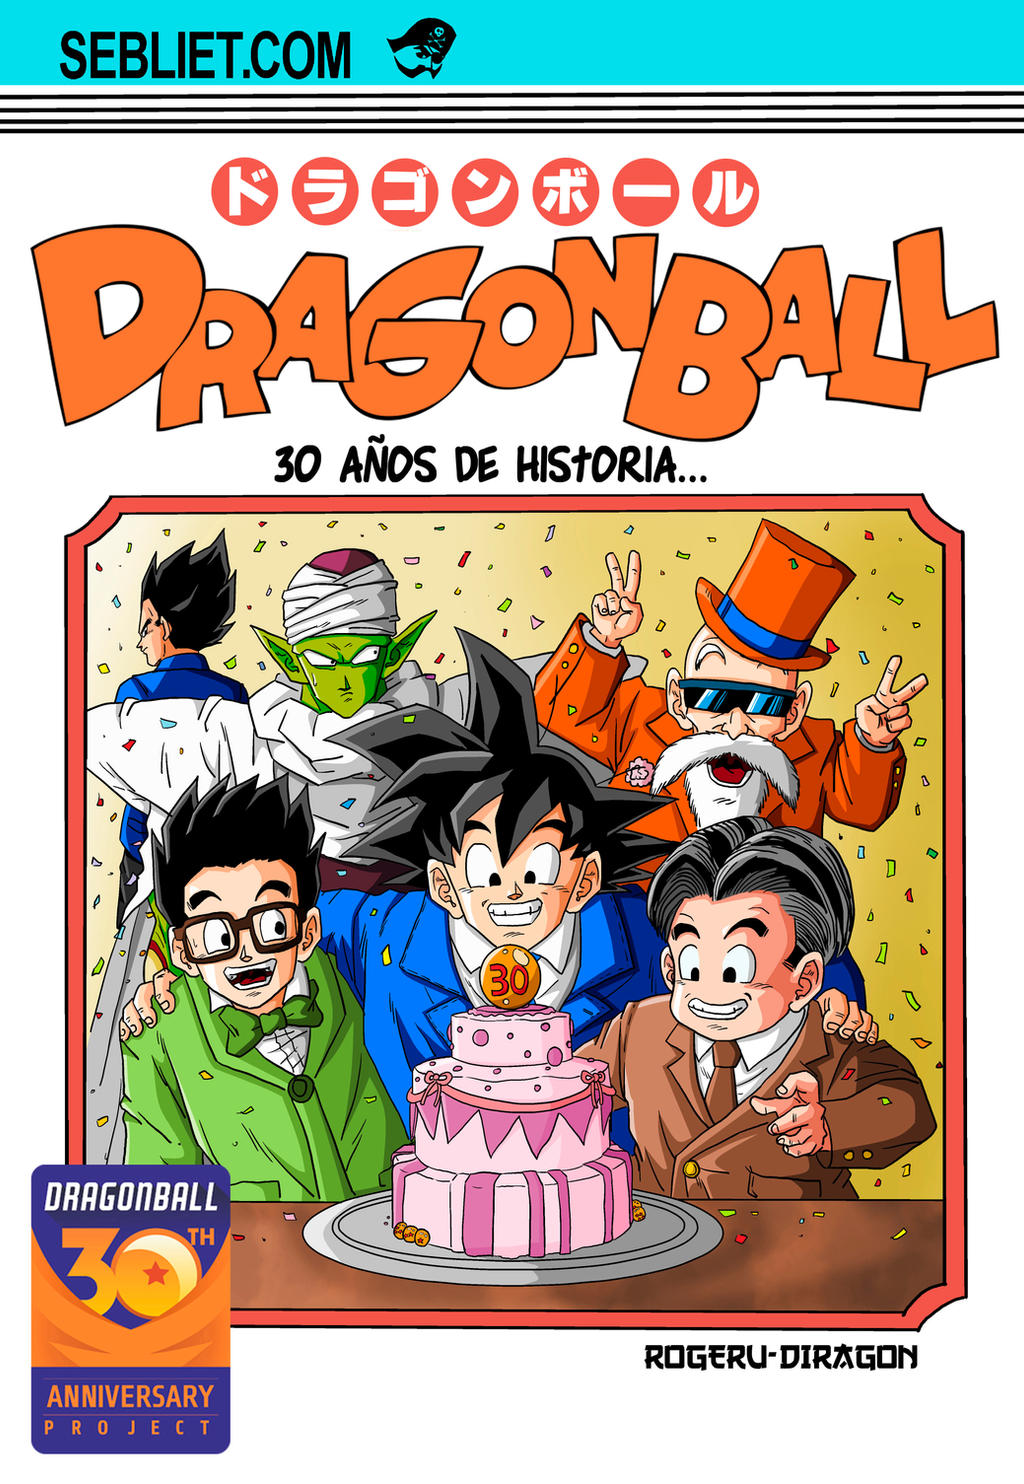 Dragon Ball 30th Anniversary by Diragon12 on DeviantArt